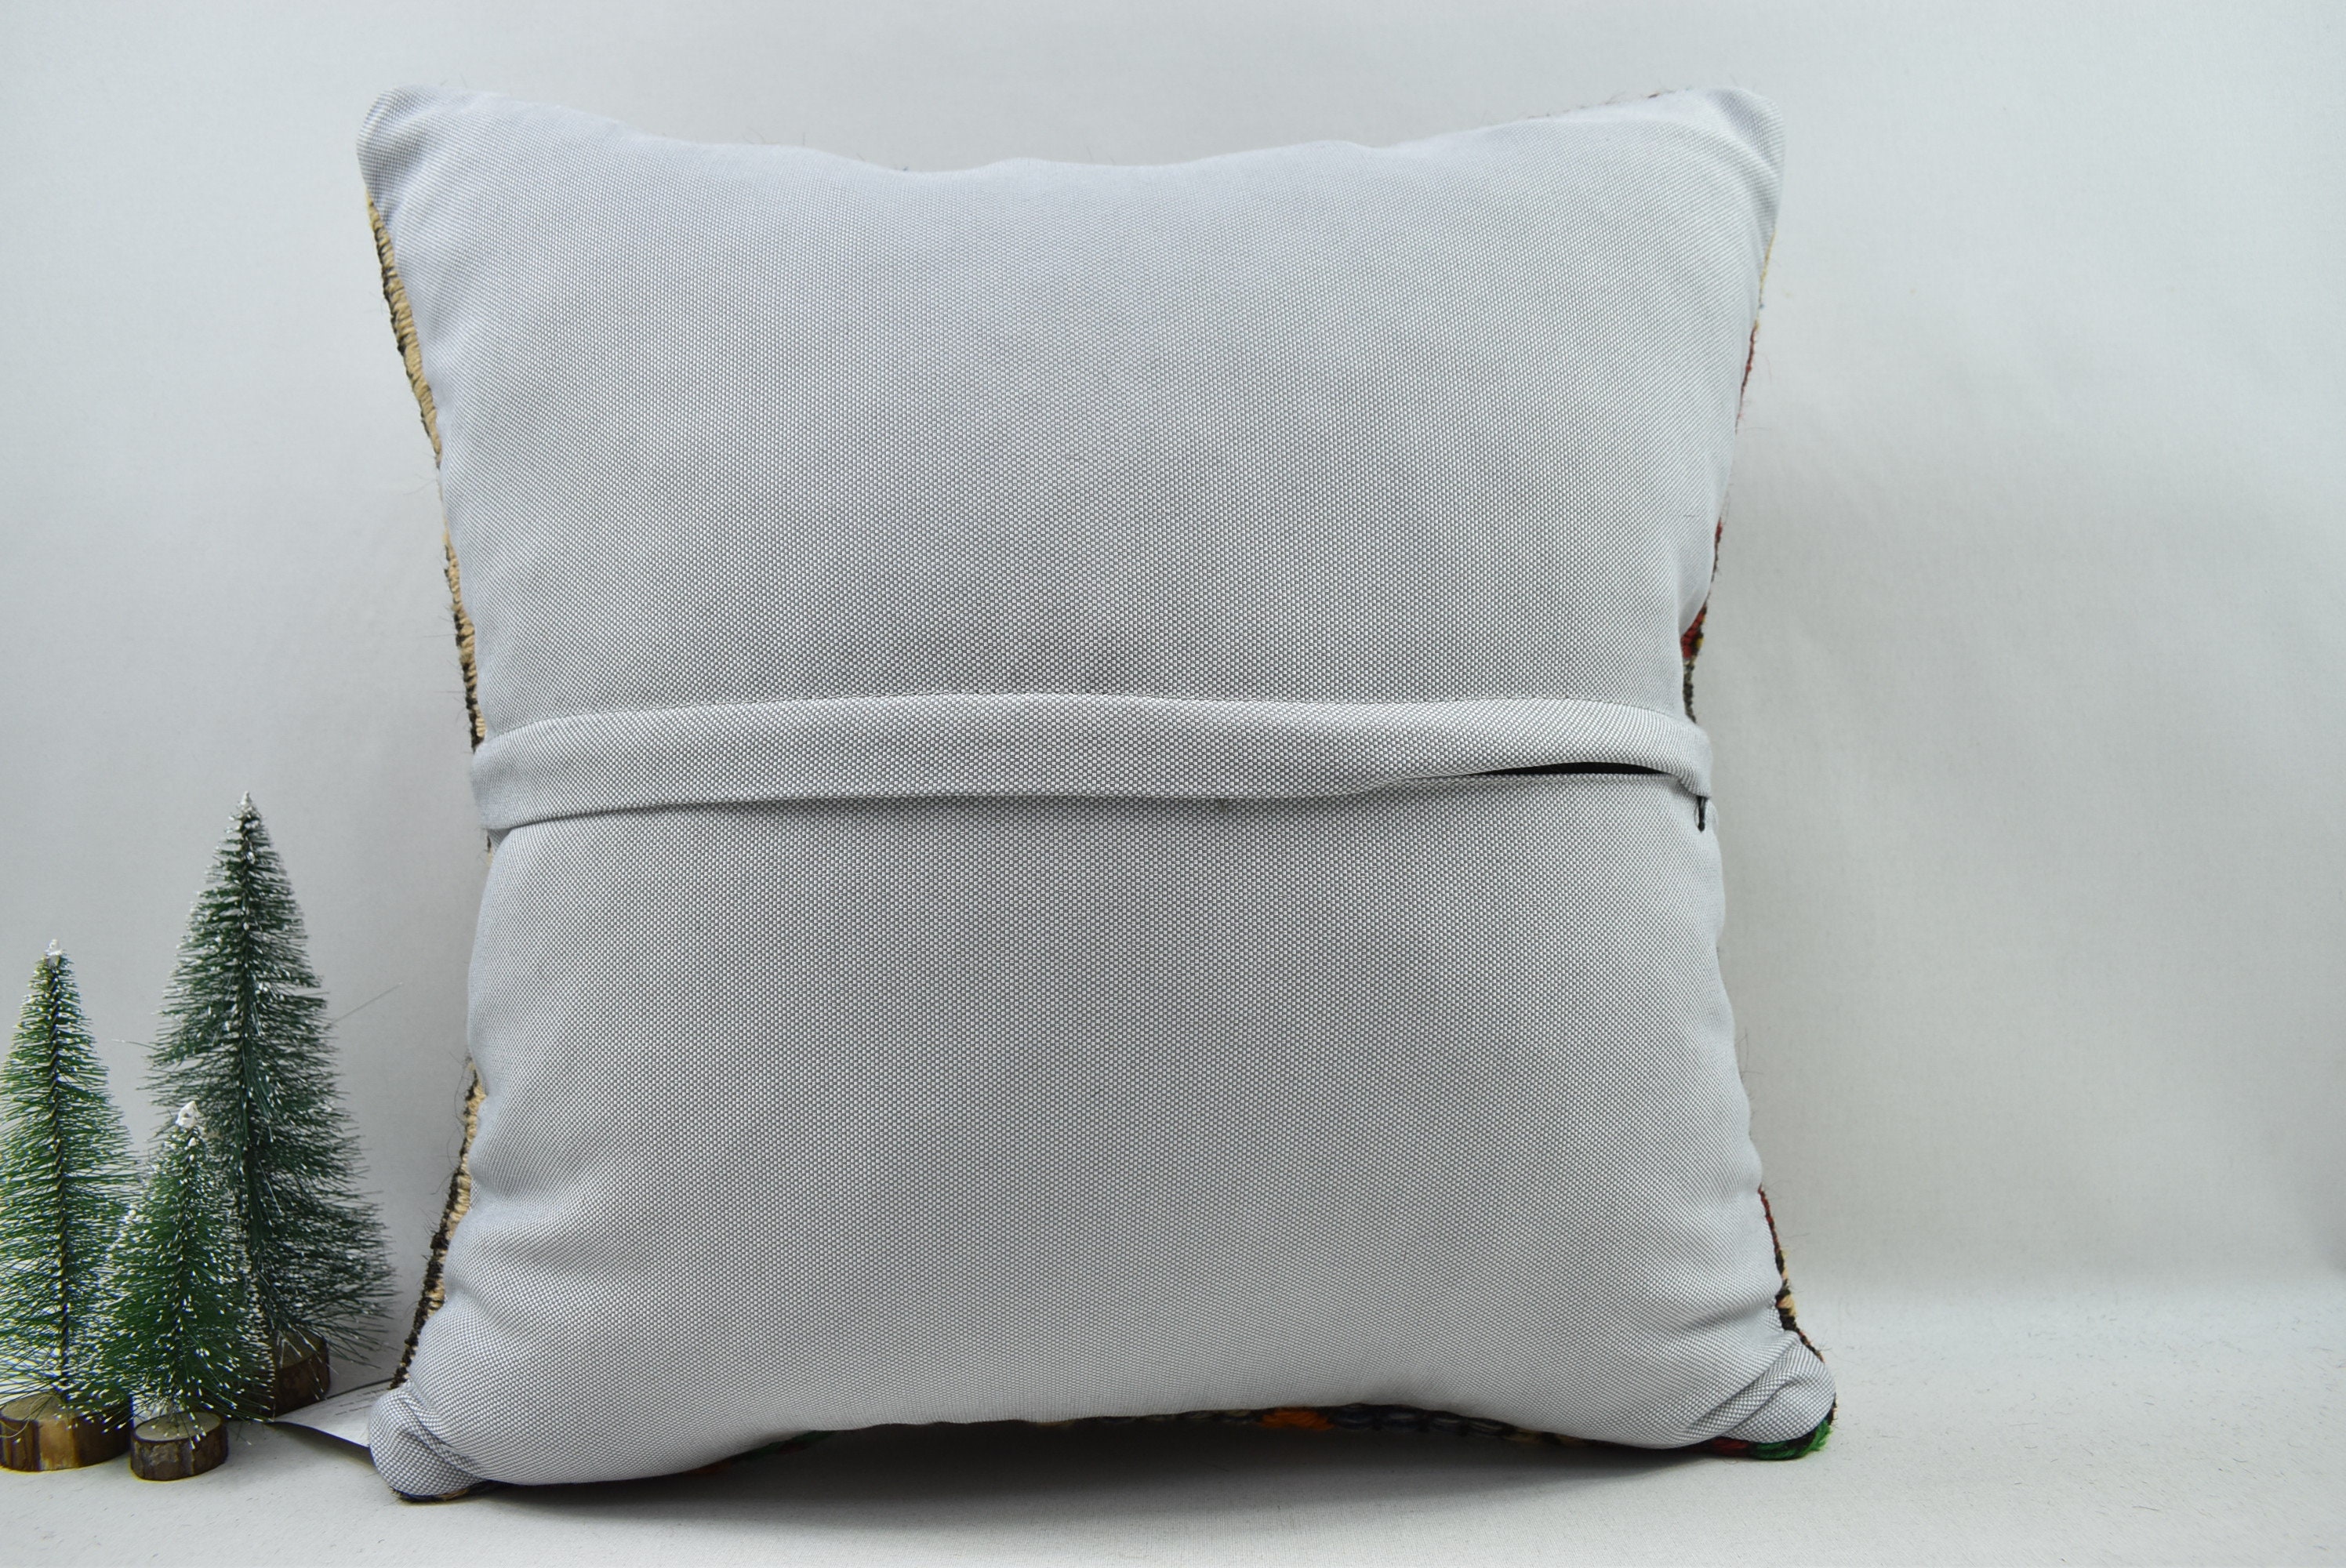 Rug Pillow Throw Pillow Wholesale Cushion 12x20 Beige Case 6258 Kilim Pillow Turkish Pillow Home Decor Pillow Ottoman Cover